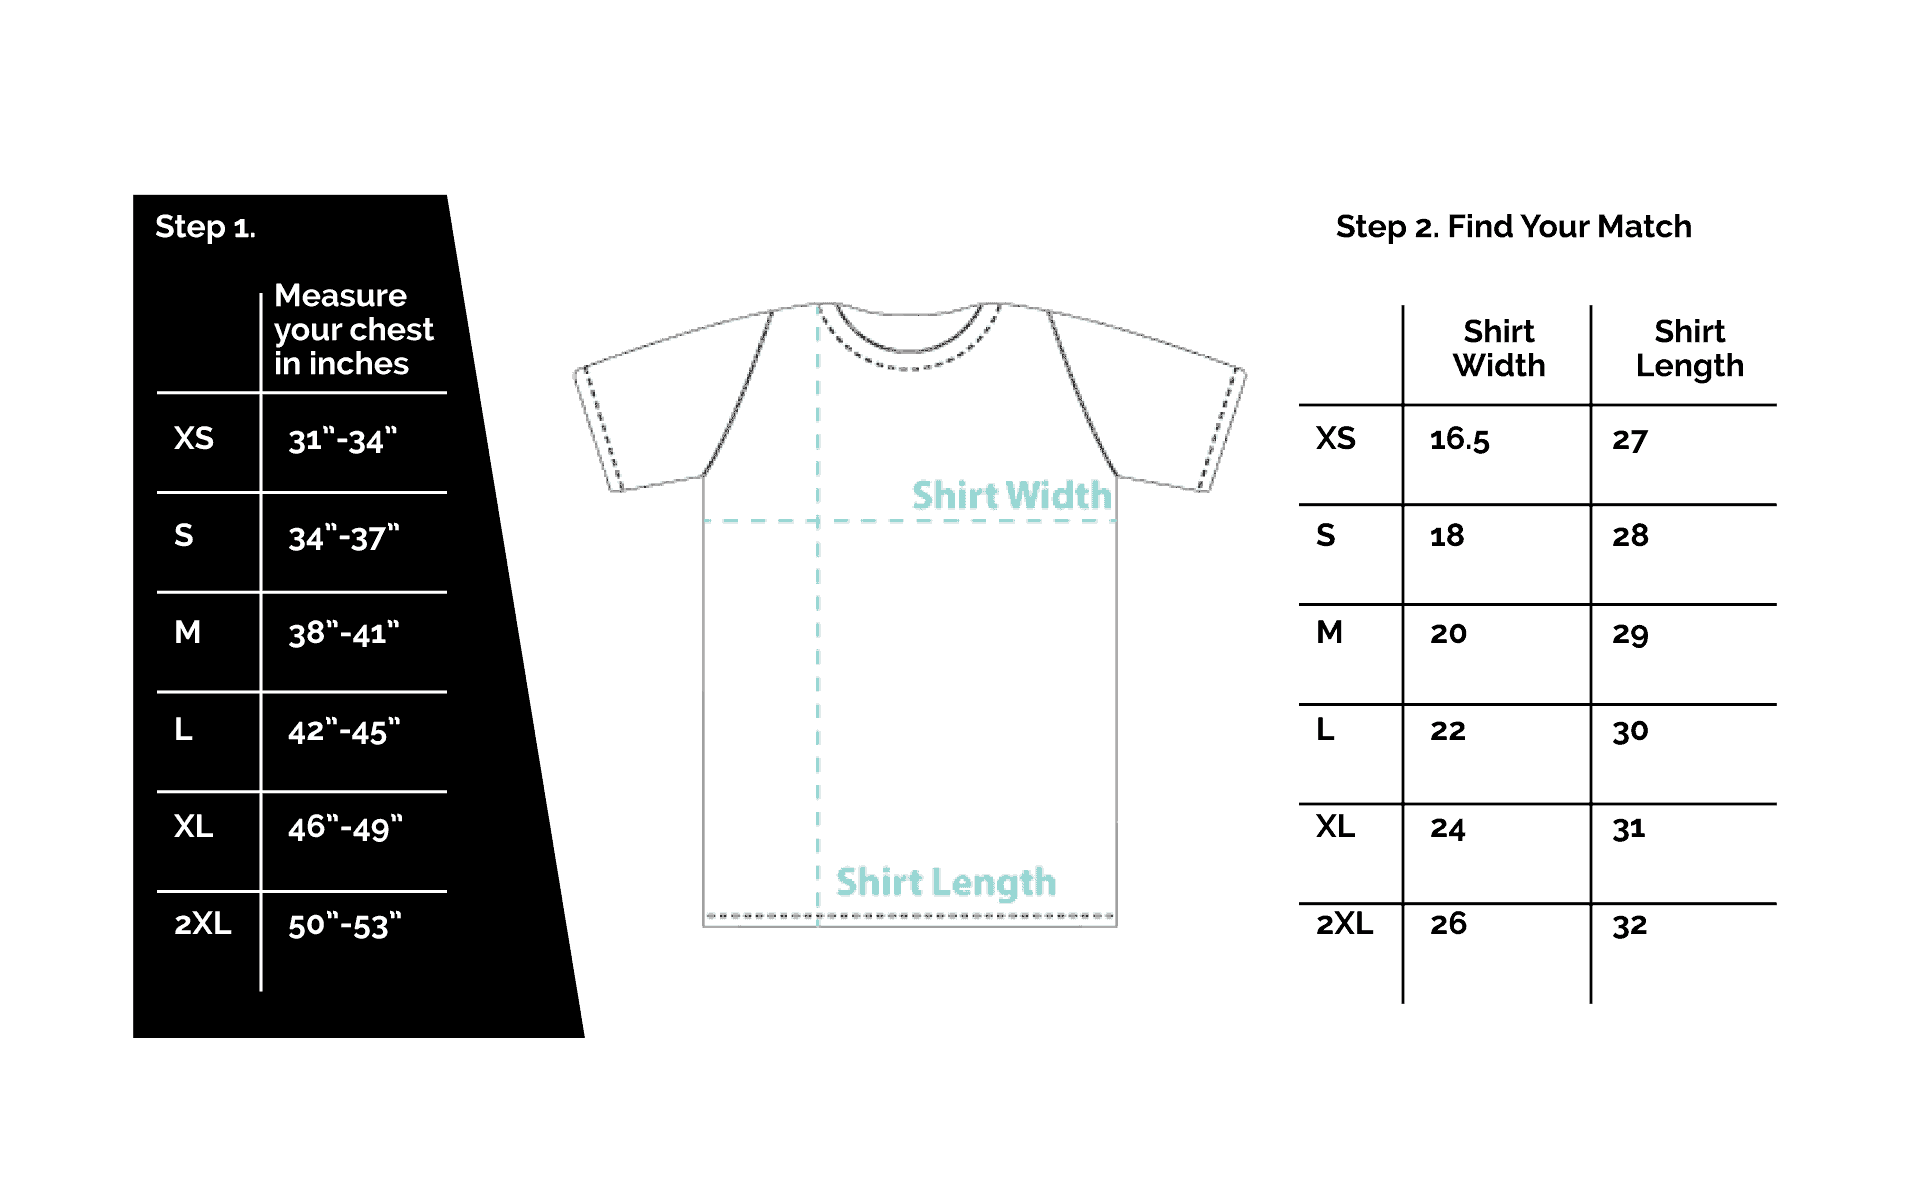 Tshirt Size Chart